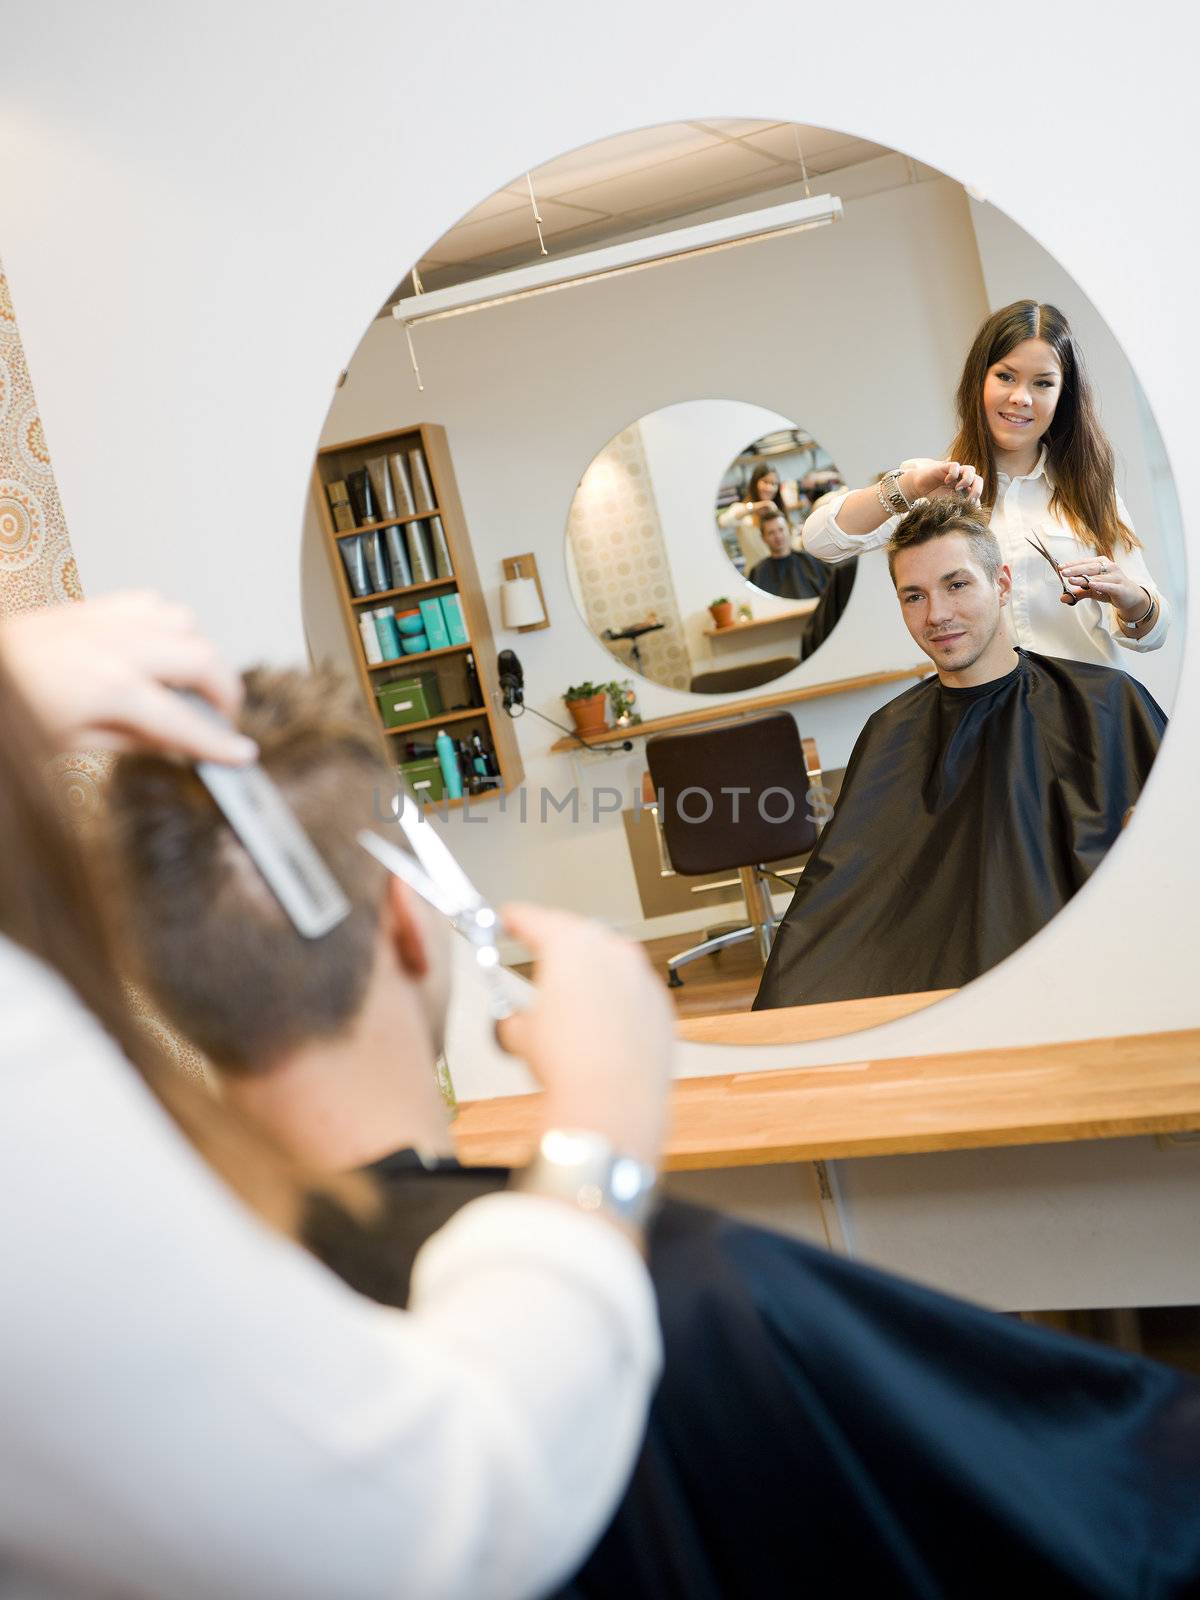 Beauty salon situation by gemenacom